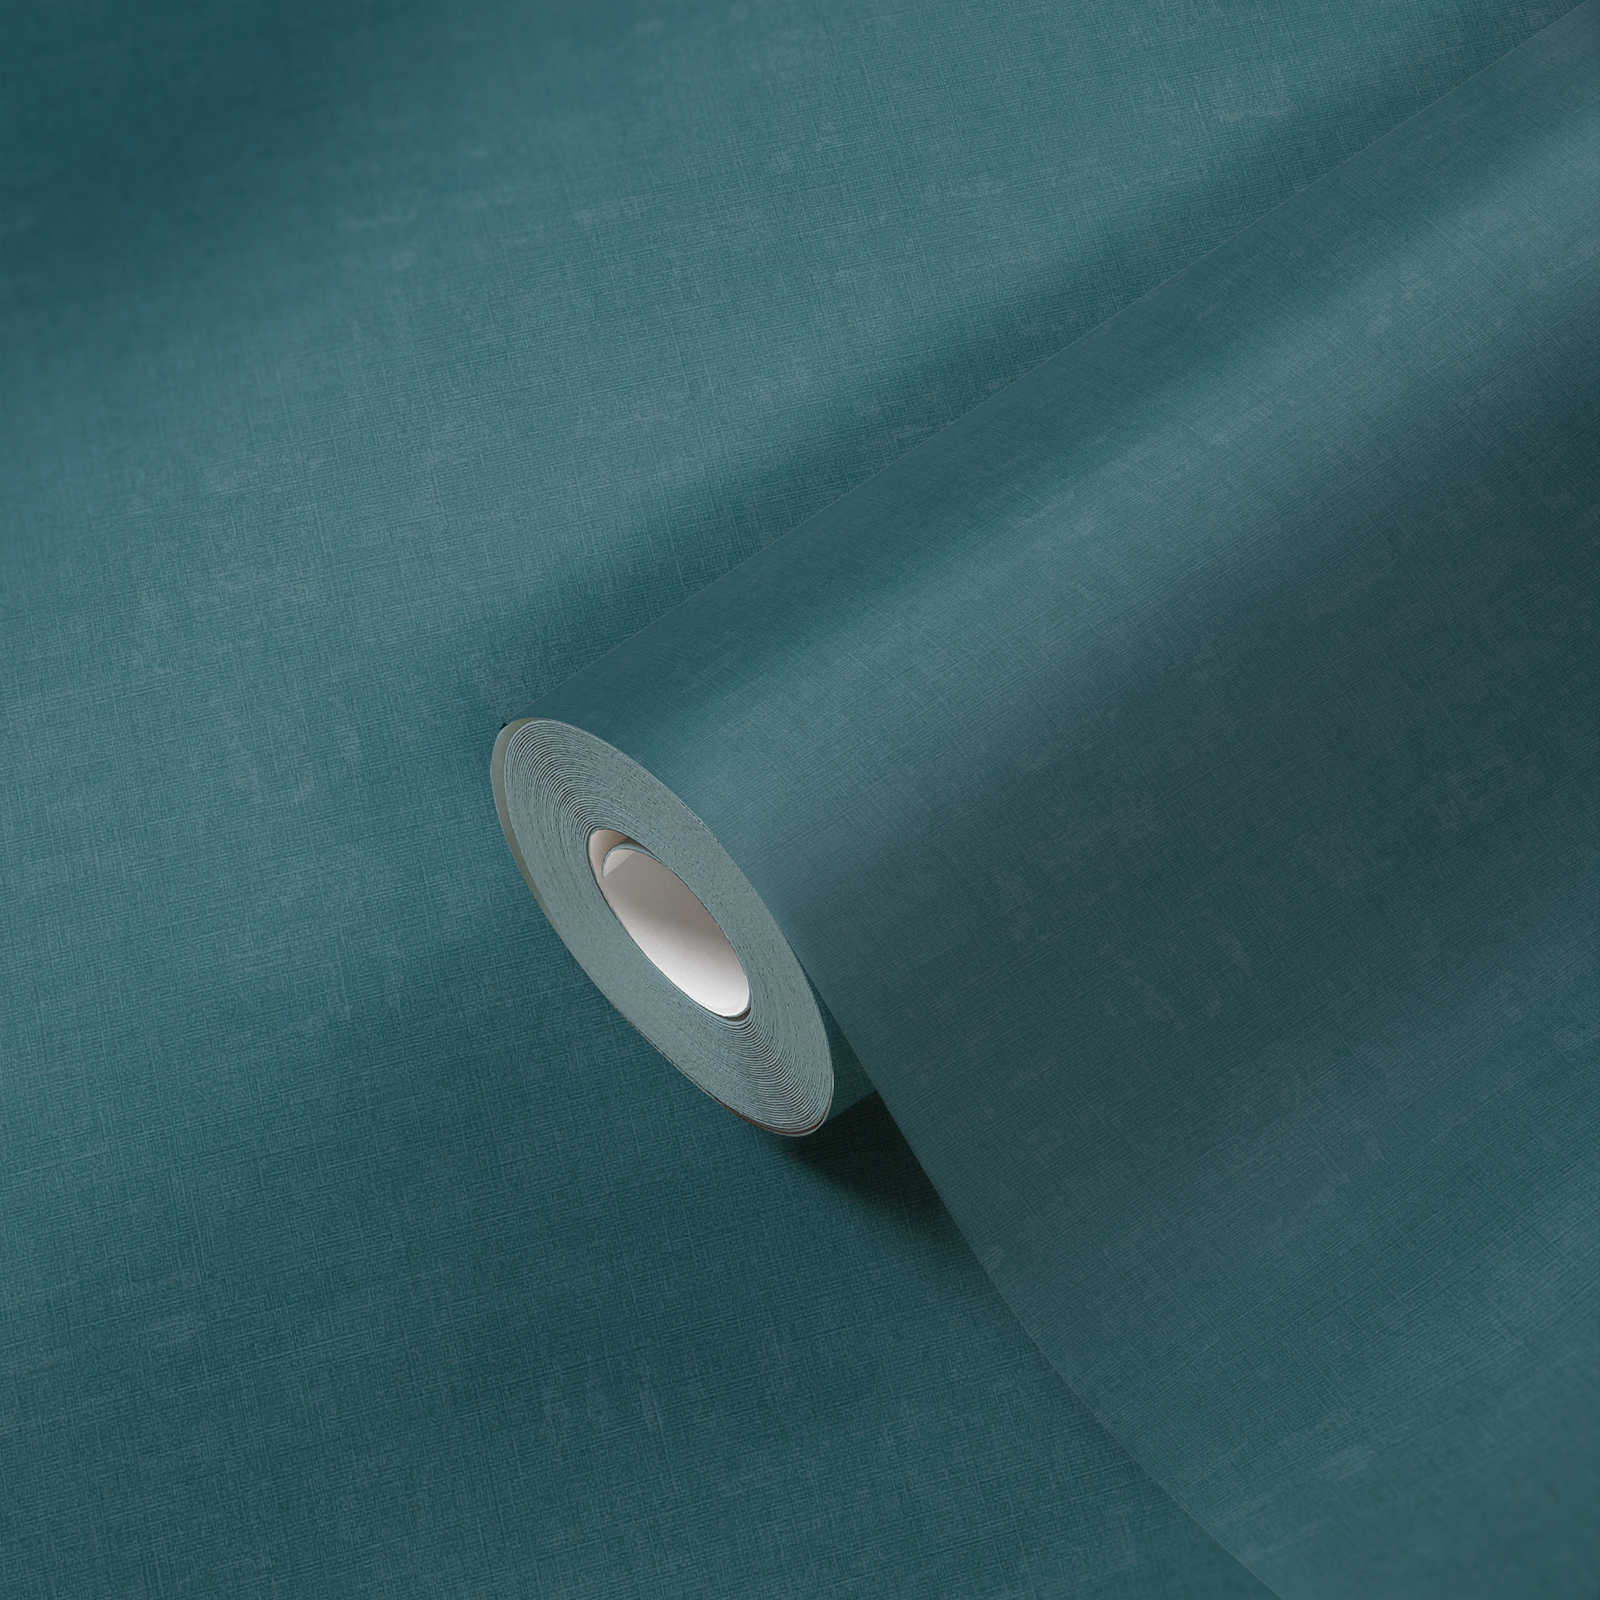             Papel pintado no tejido liso con efecto moteado - azul, verde
        